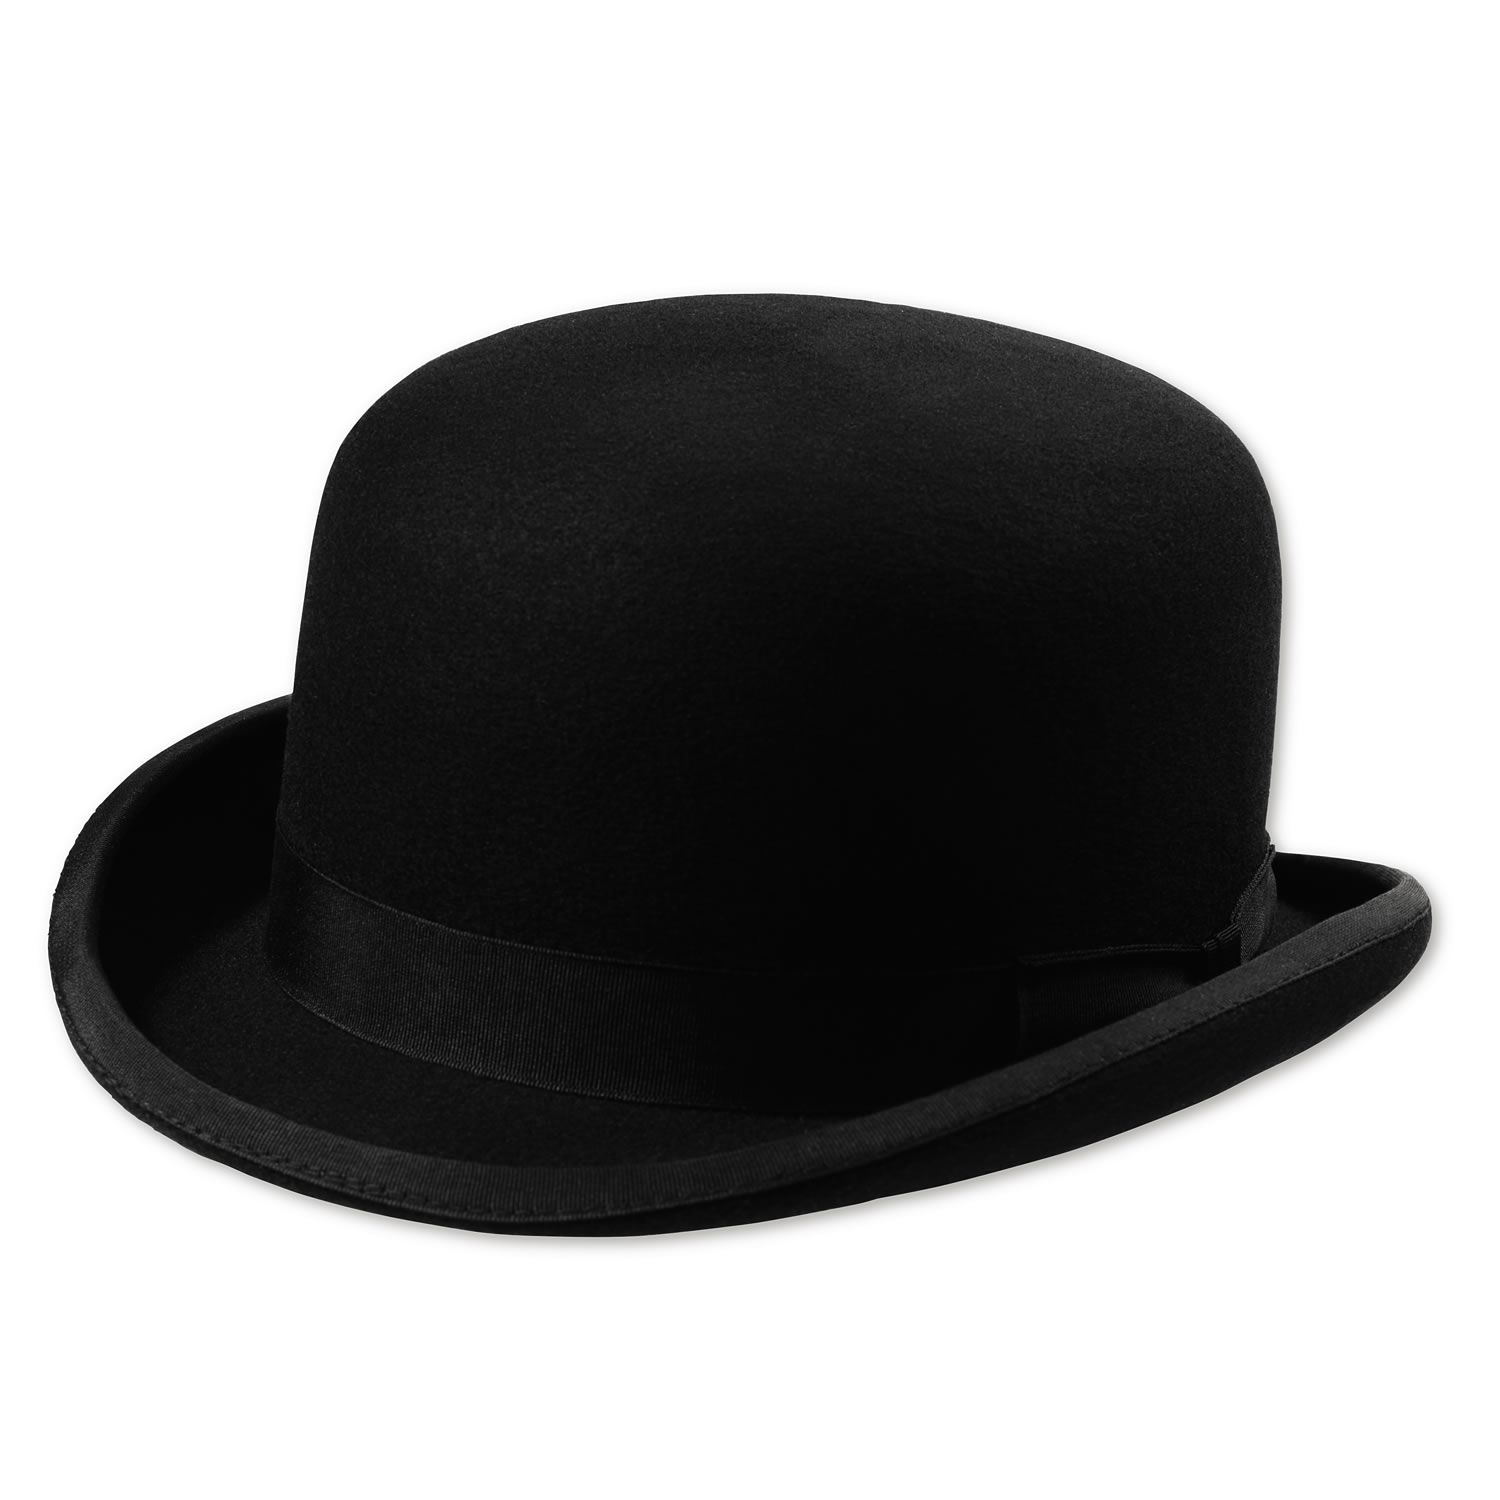 Bowler Hat PNG HD - 150867